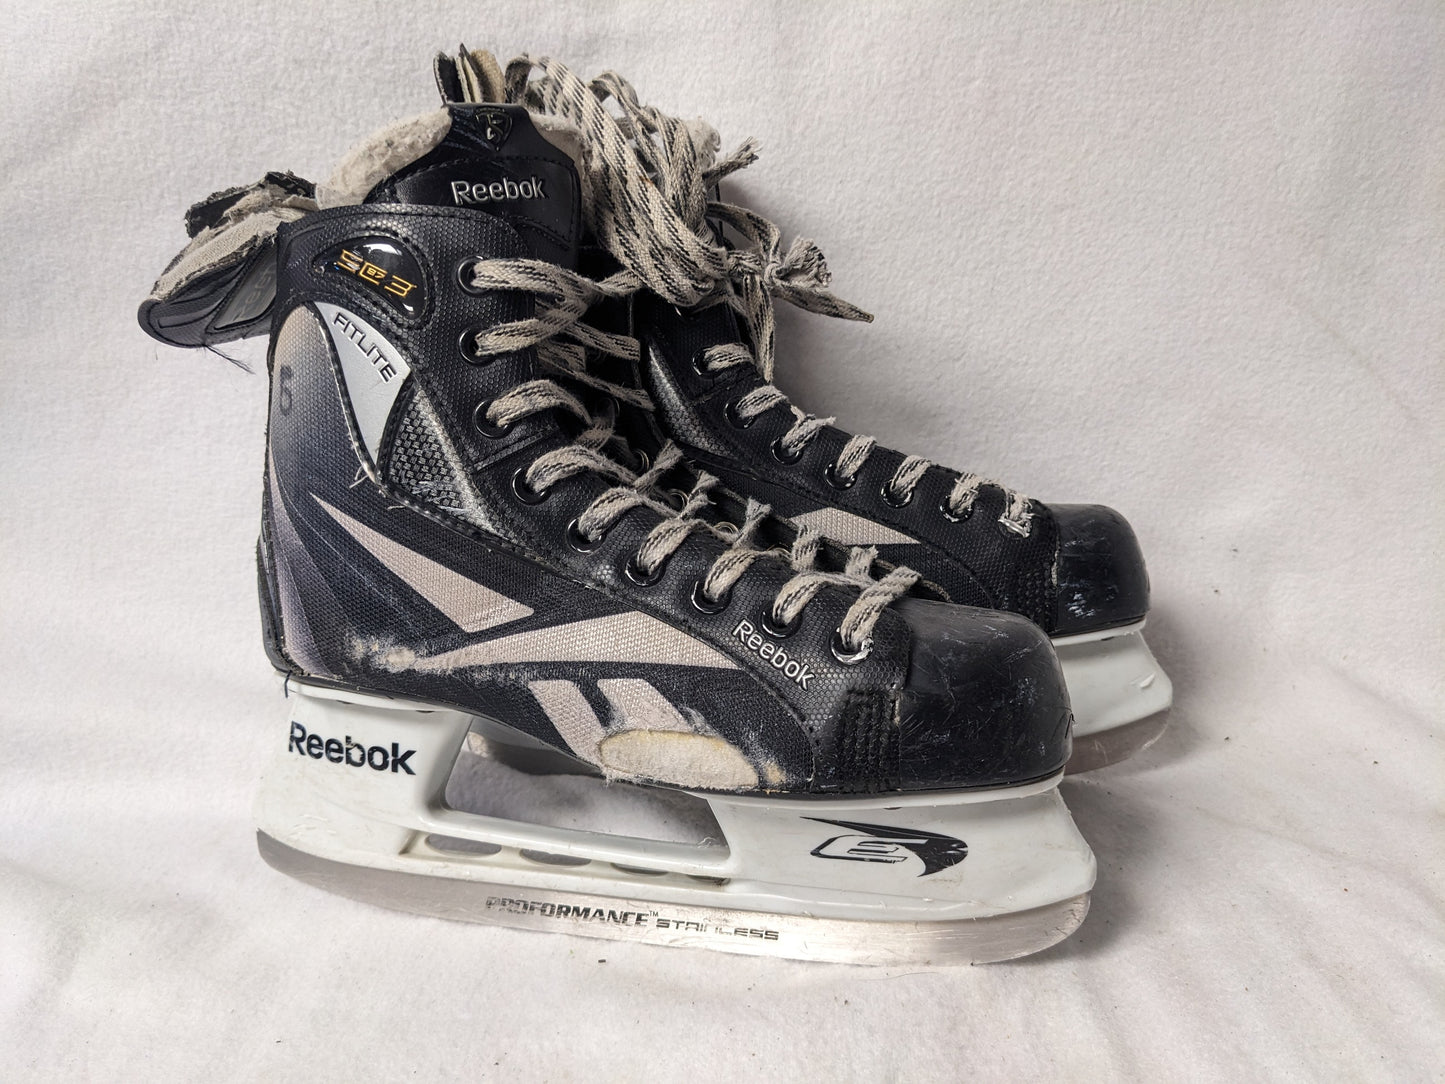 Reebok Fitlite SC3 07 Hockey Ice Skates Size 5 Color Black Condition Used